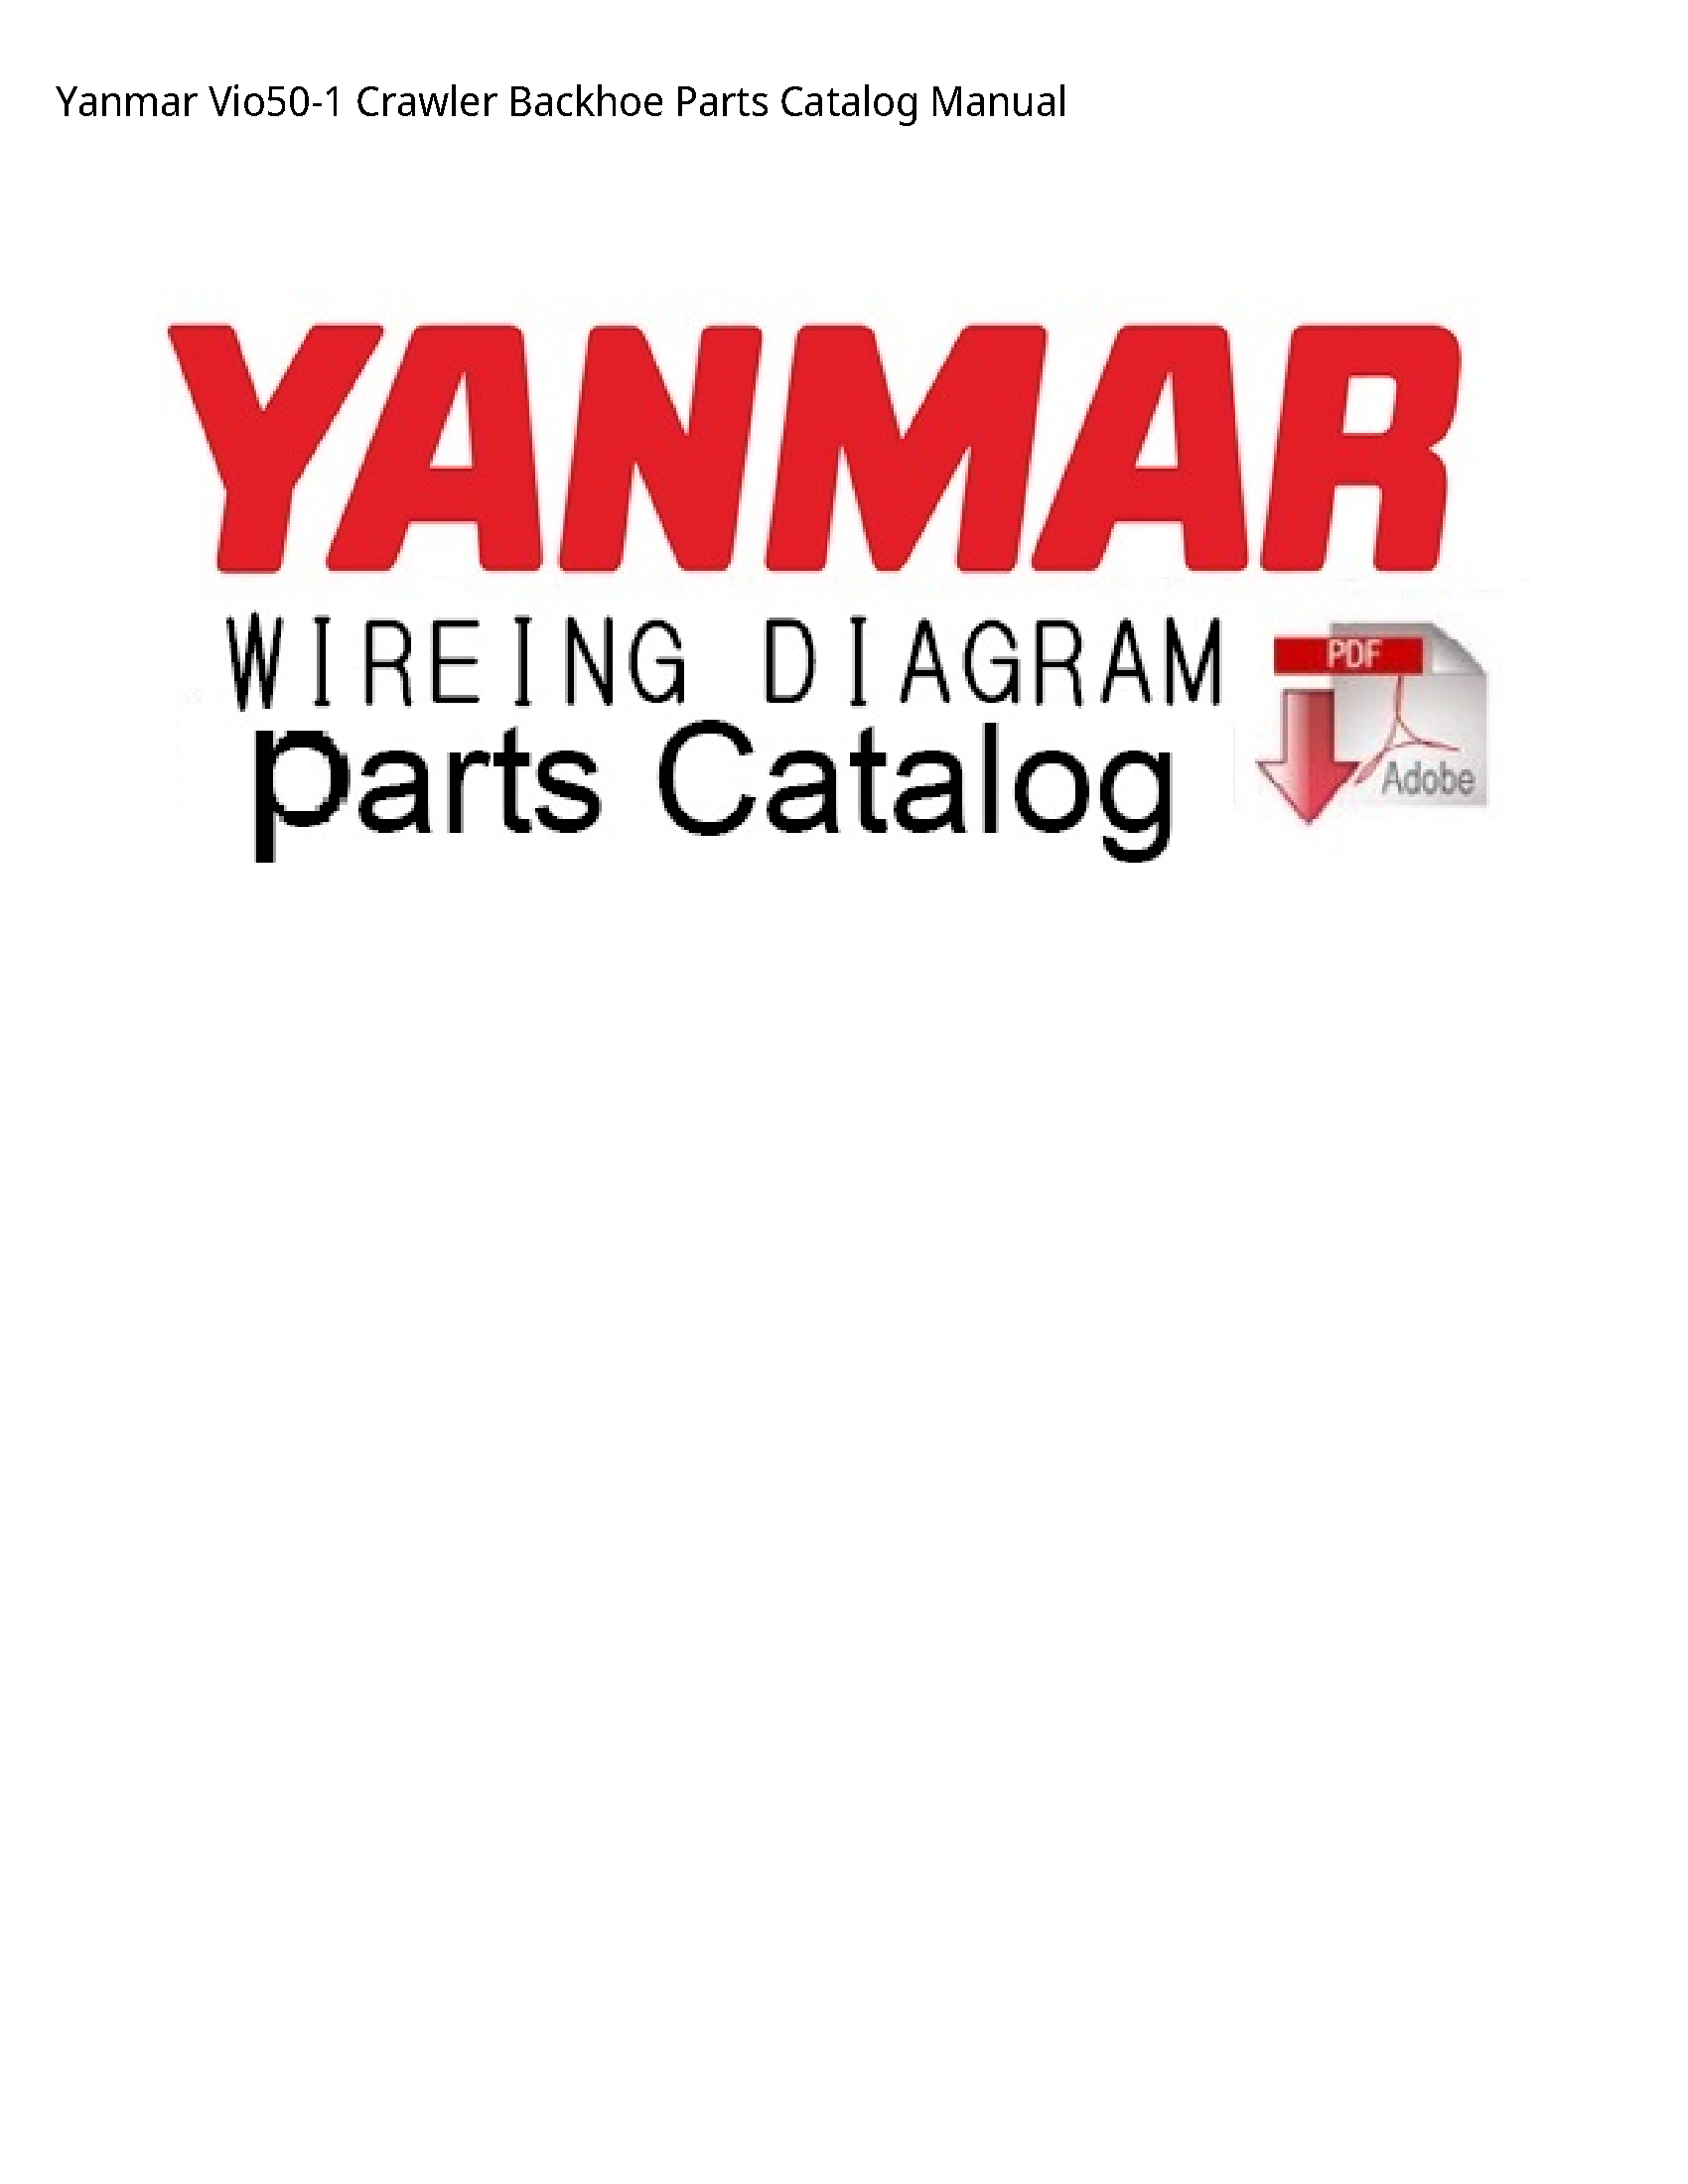 Yanmar Vio50-1 Crawler Backhoe Parts Catalog manual